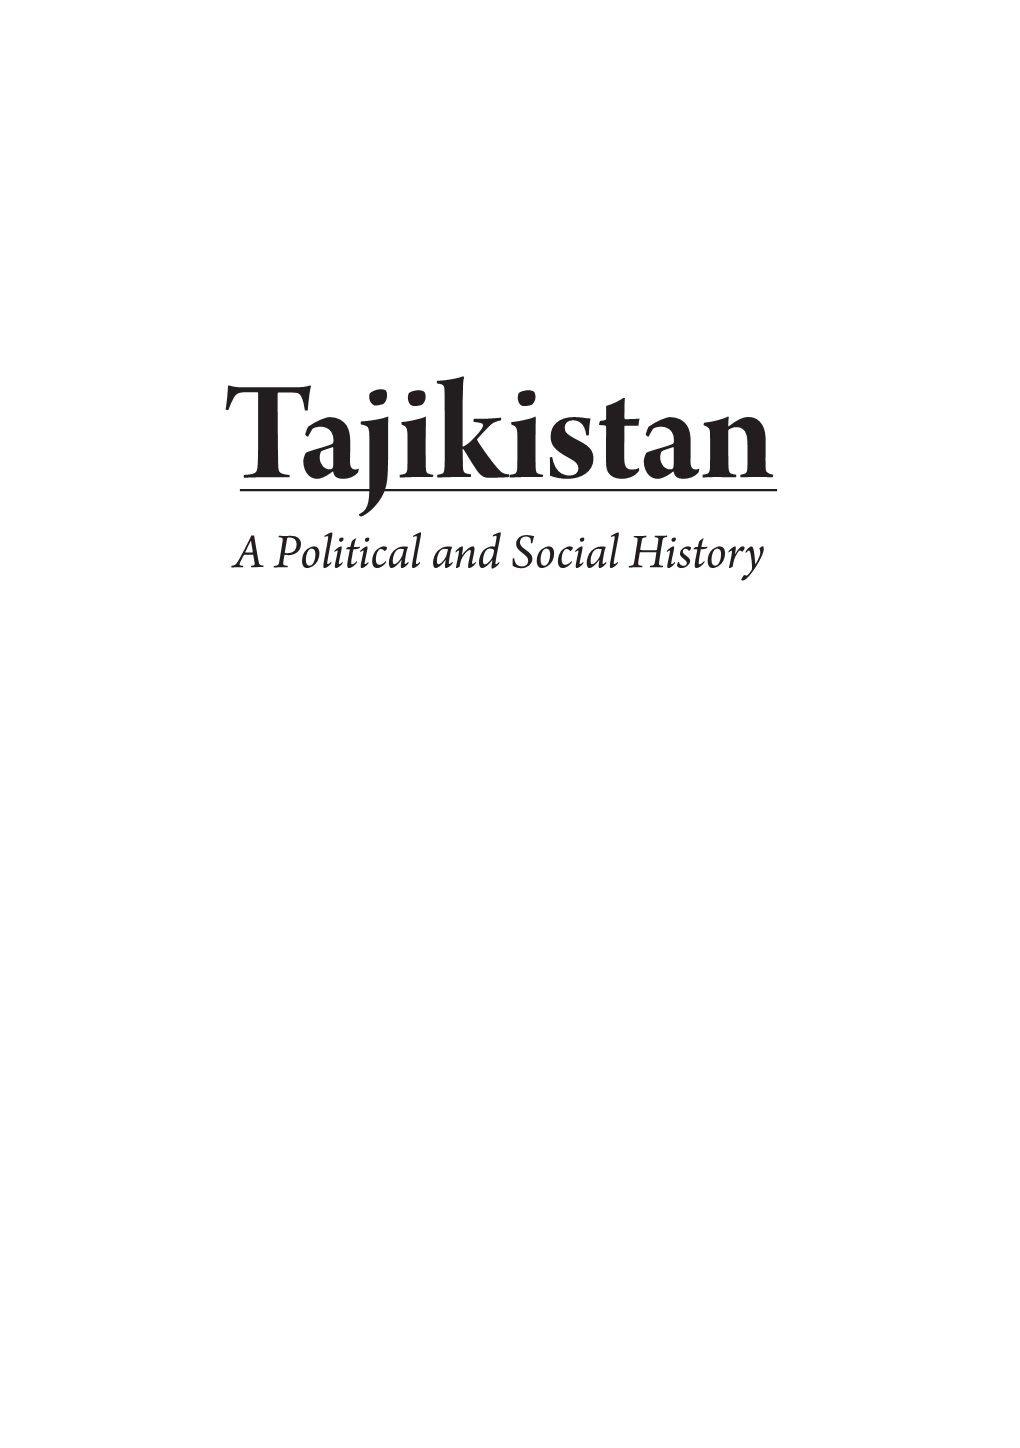 Tajikistan a Political and Social History